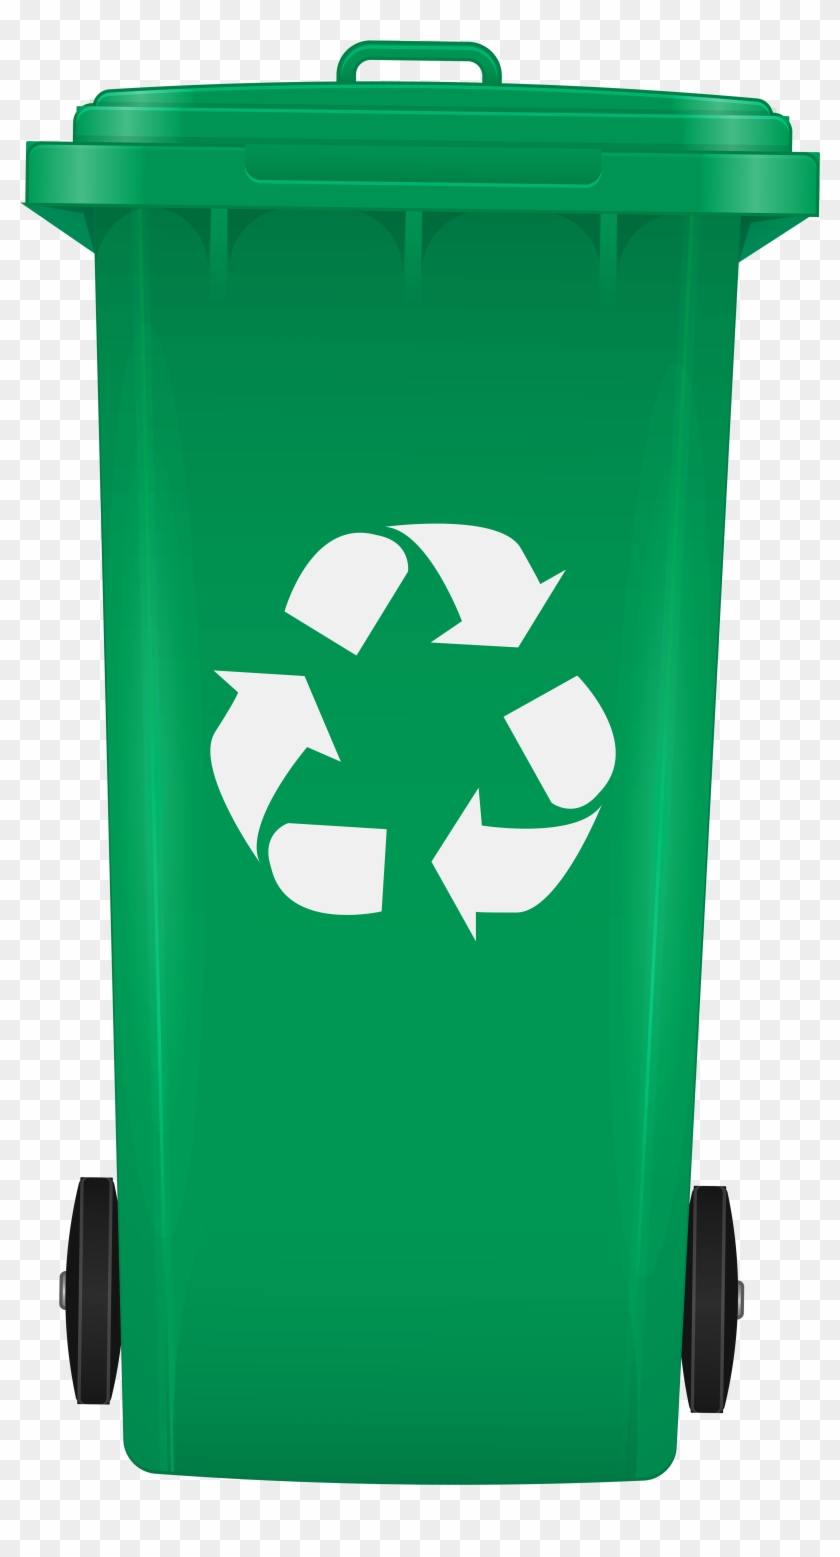 Recycling Bin Png Clip Art - Recycling Paper #377381